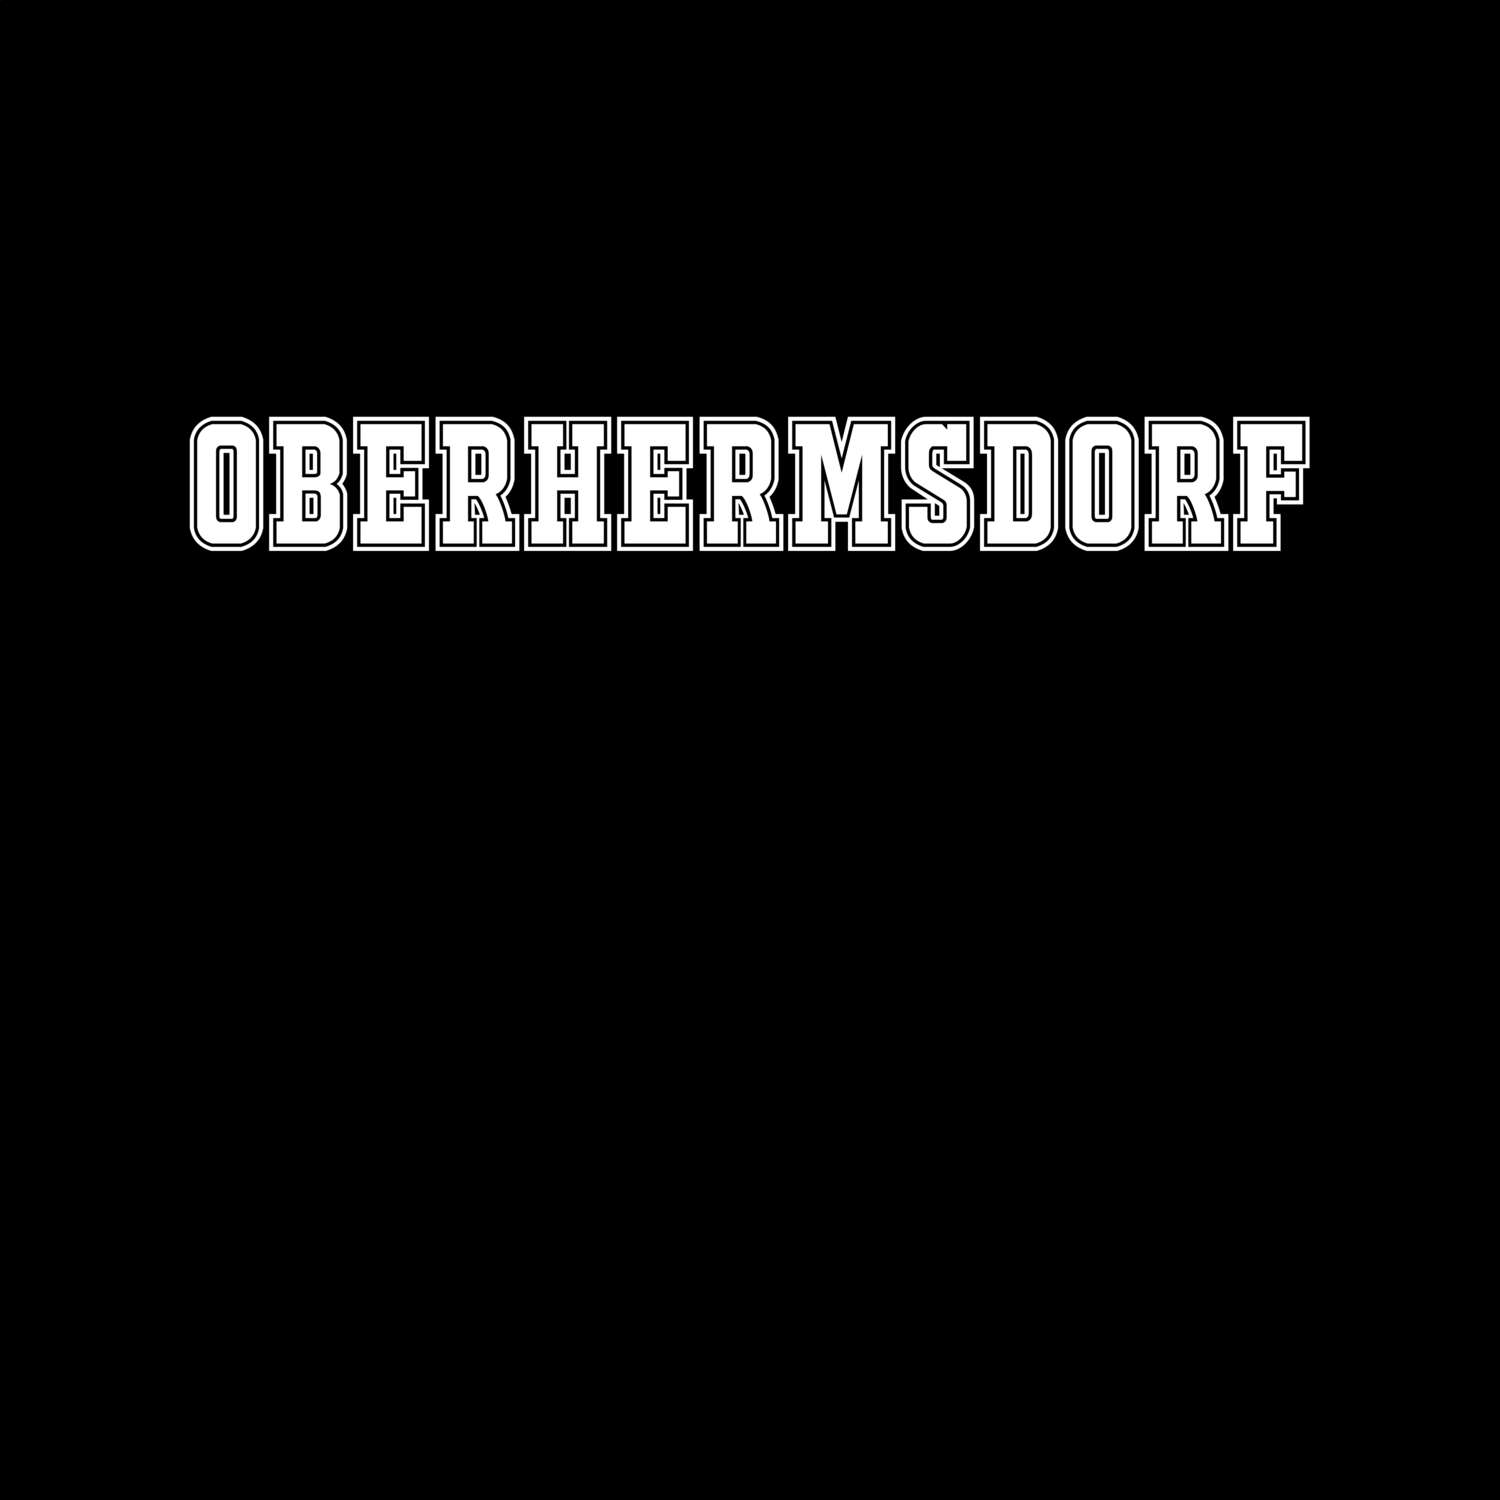 Oberhermsdorf T-Shirt »Classic«